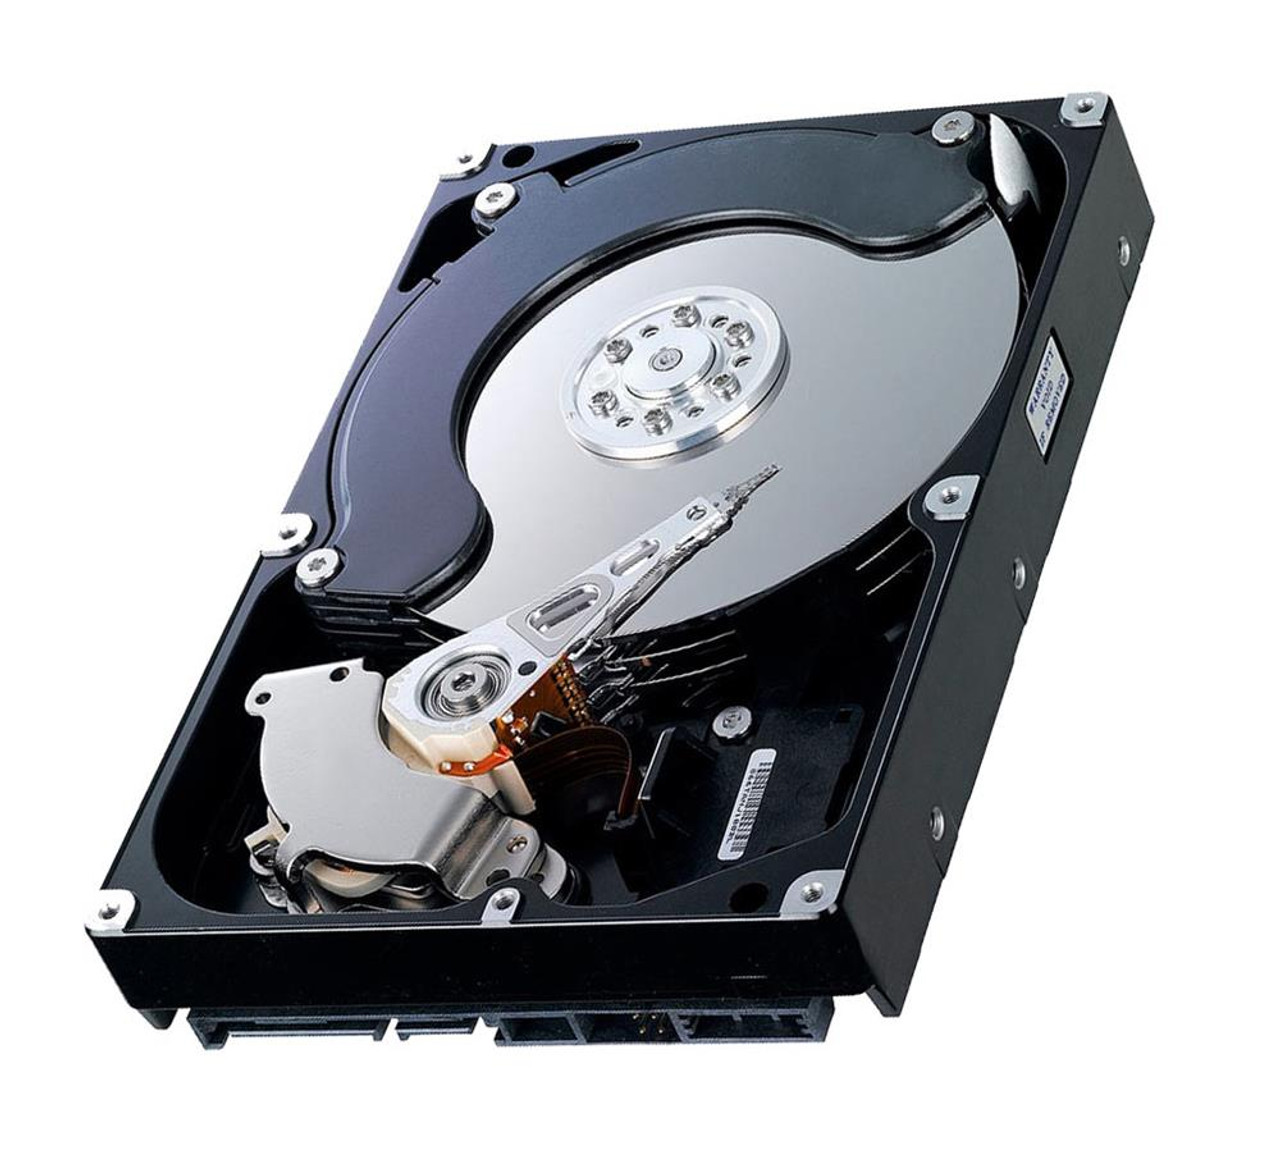 WD100AB - Western Digital Caviar 10GB 5400RPM ATA-100 2MB Cache 3.5-inch Hard Disk Drive